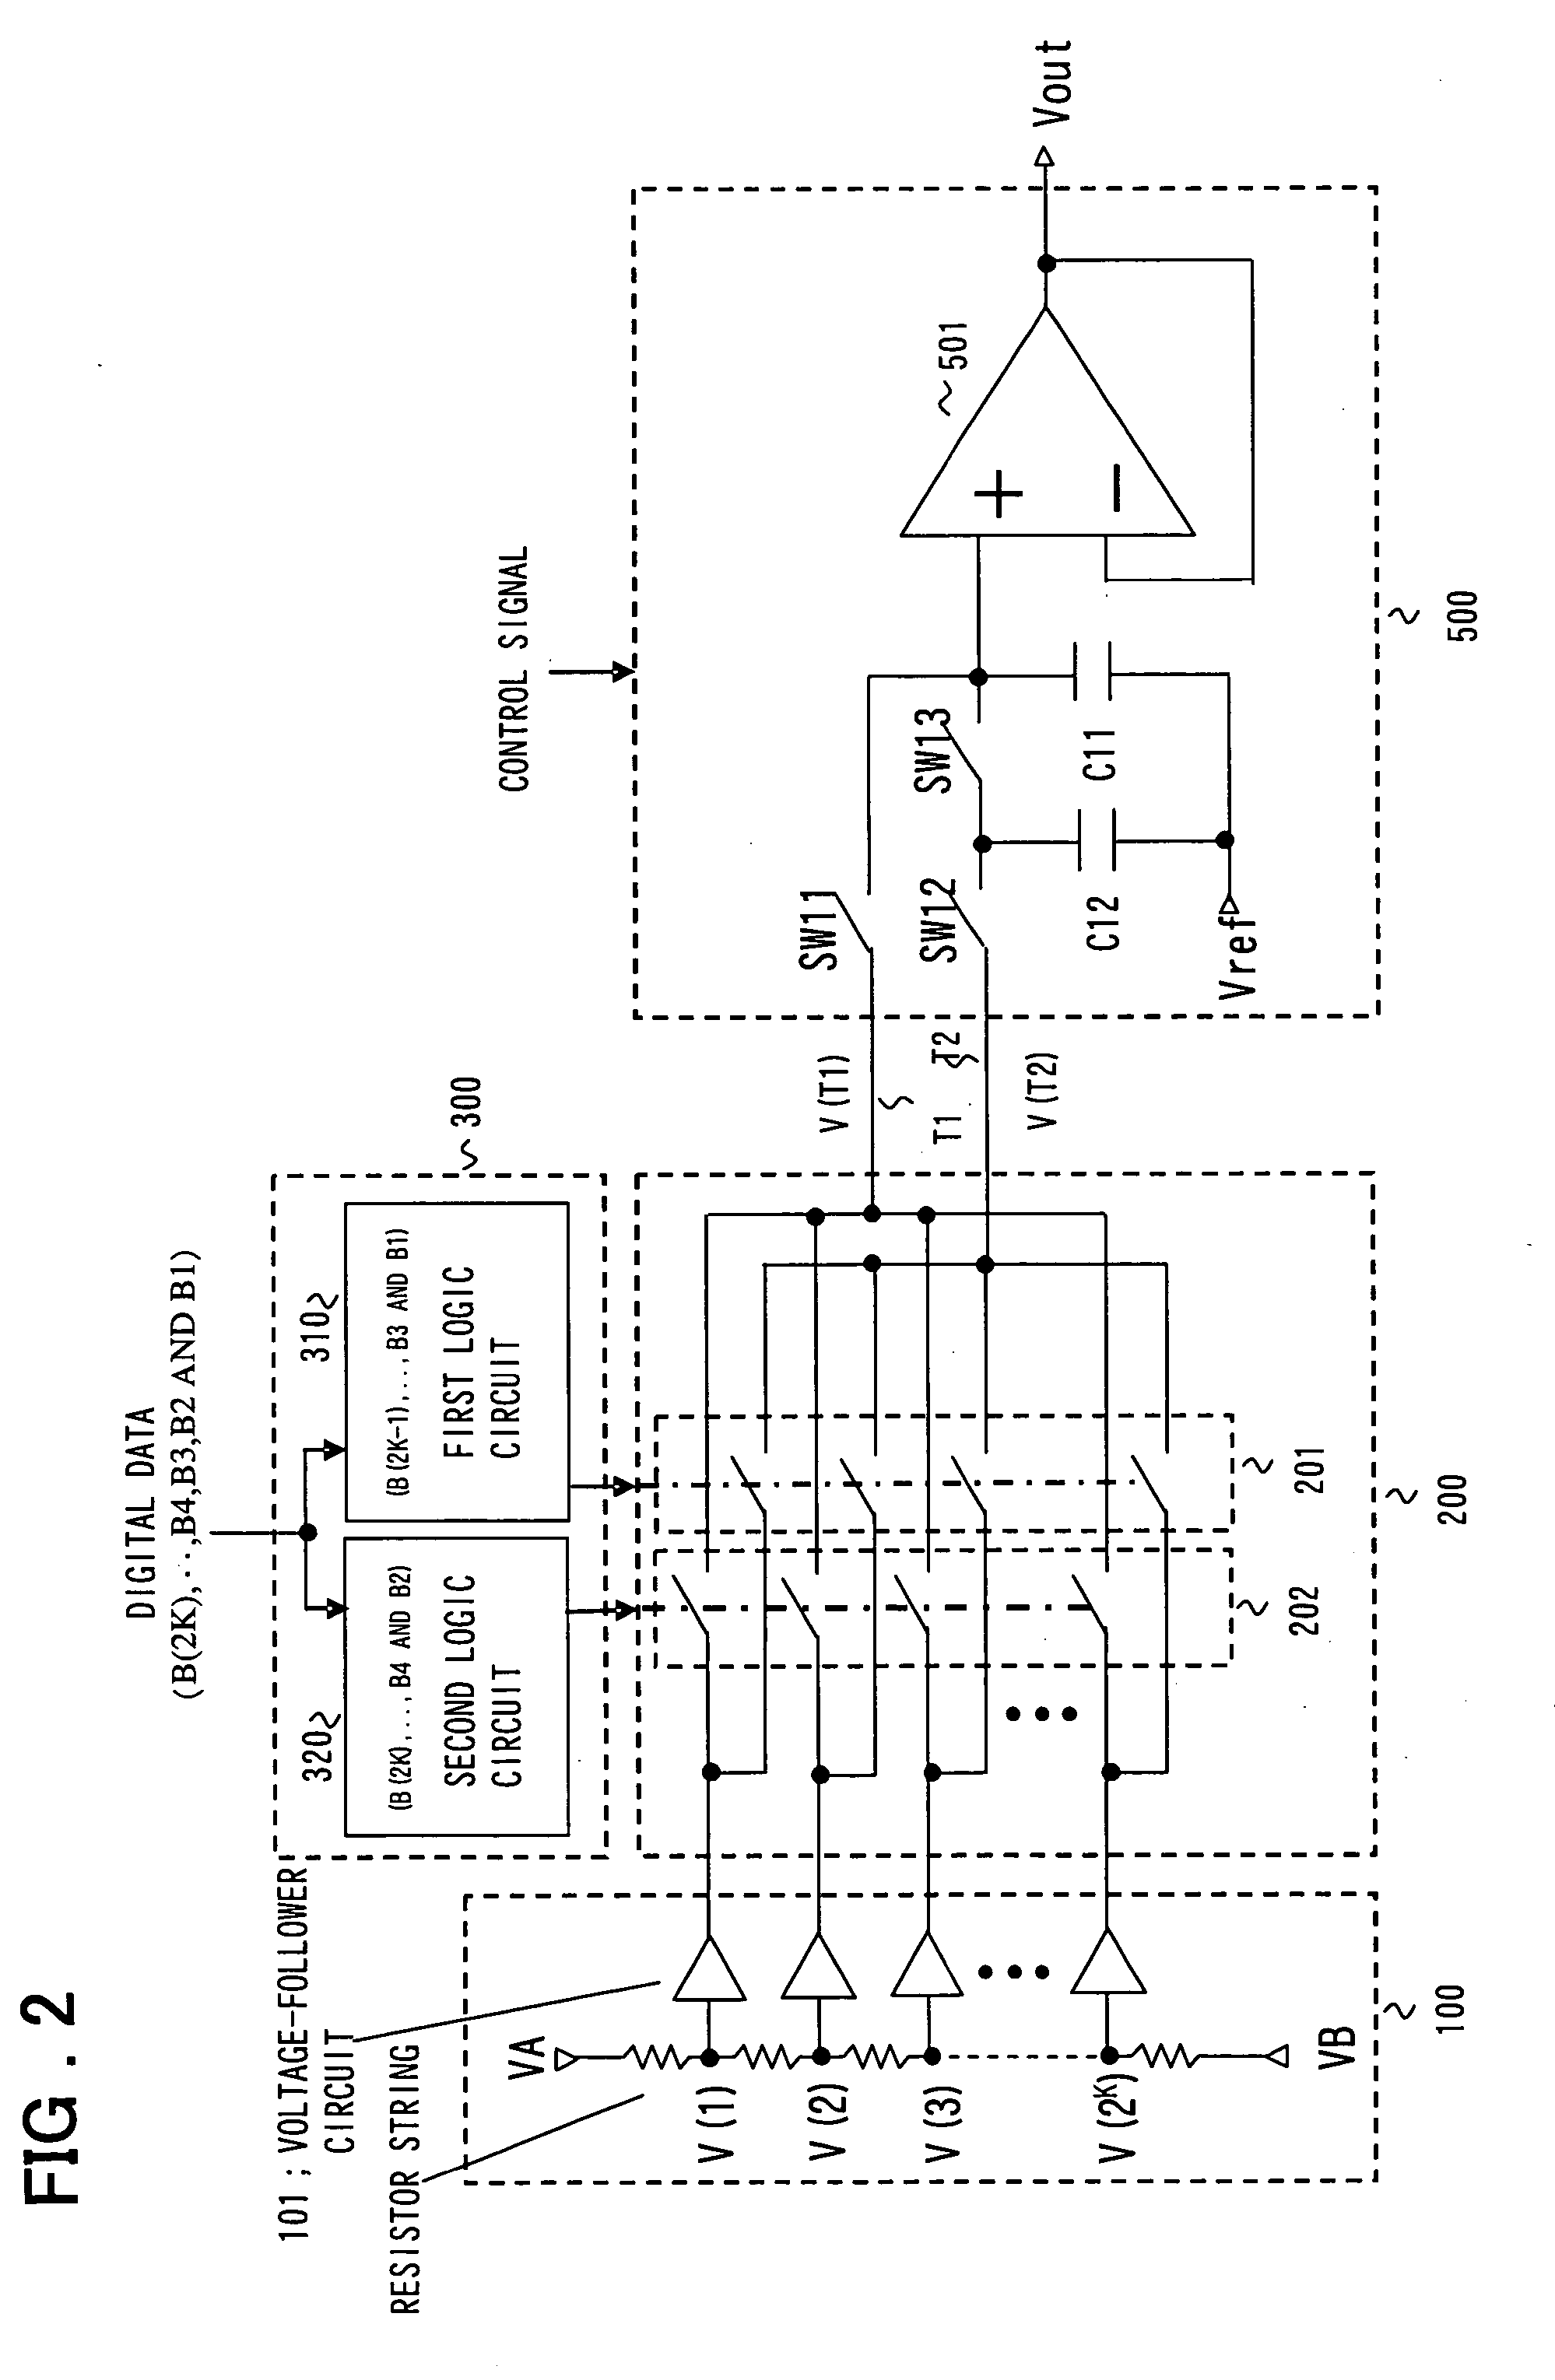 Digital-to-analog converting circuit and display device using same